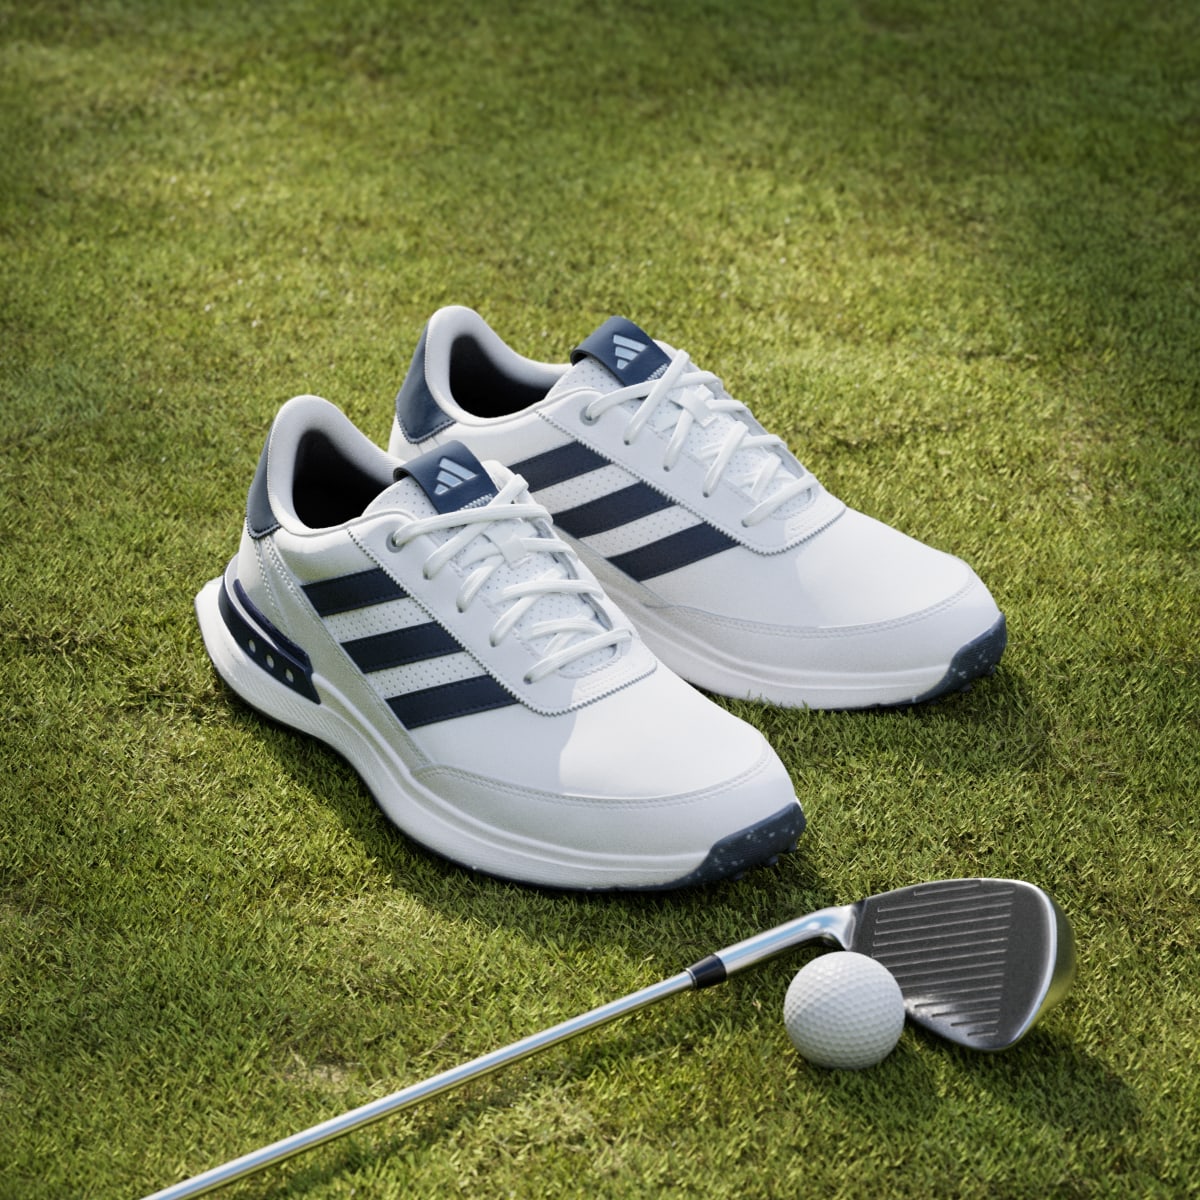 Adidas Calzado de Golf S2G Spikeless Leather 24. 4